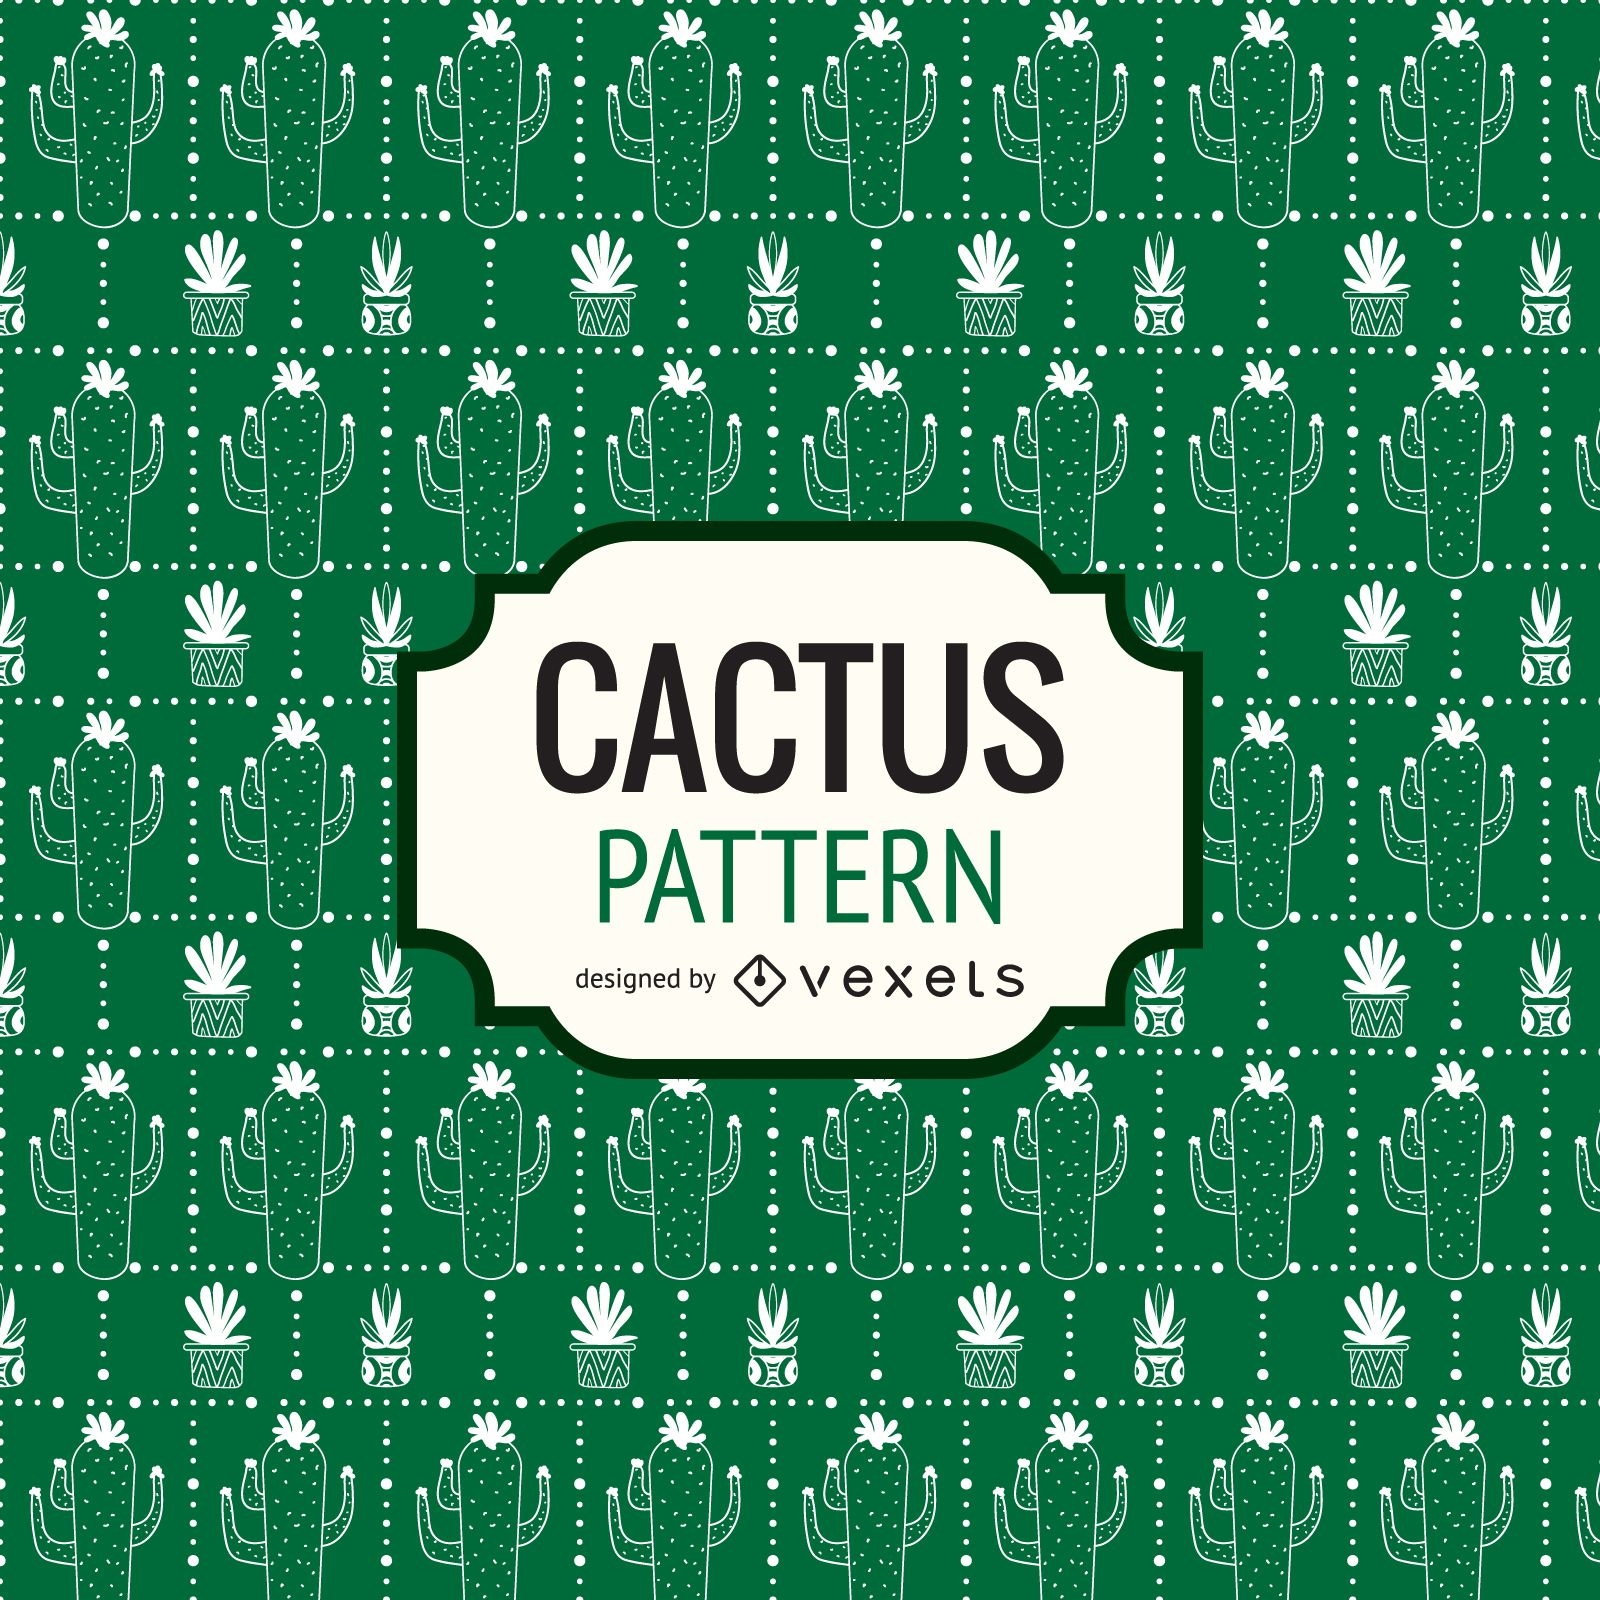 Green hand drawn cactus pattern